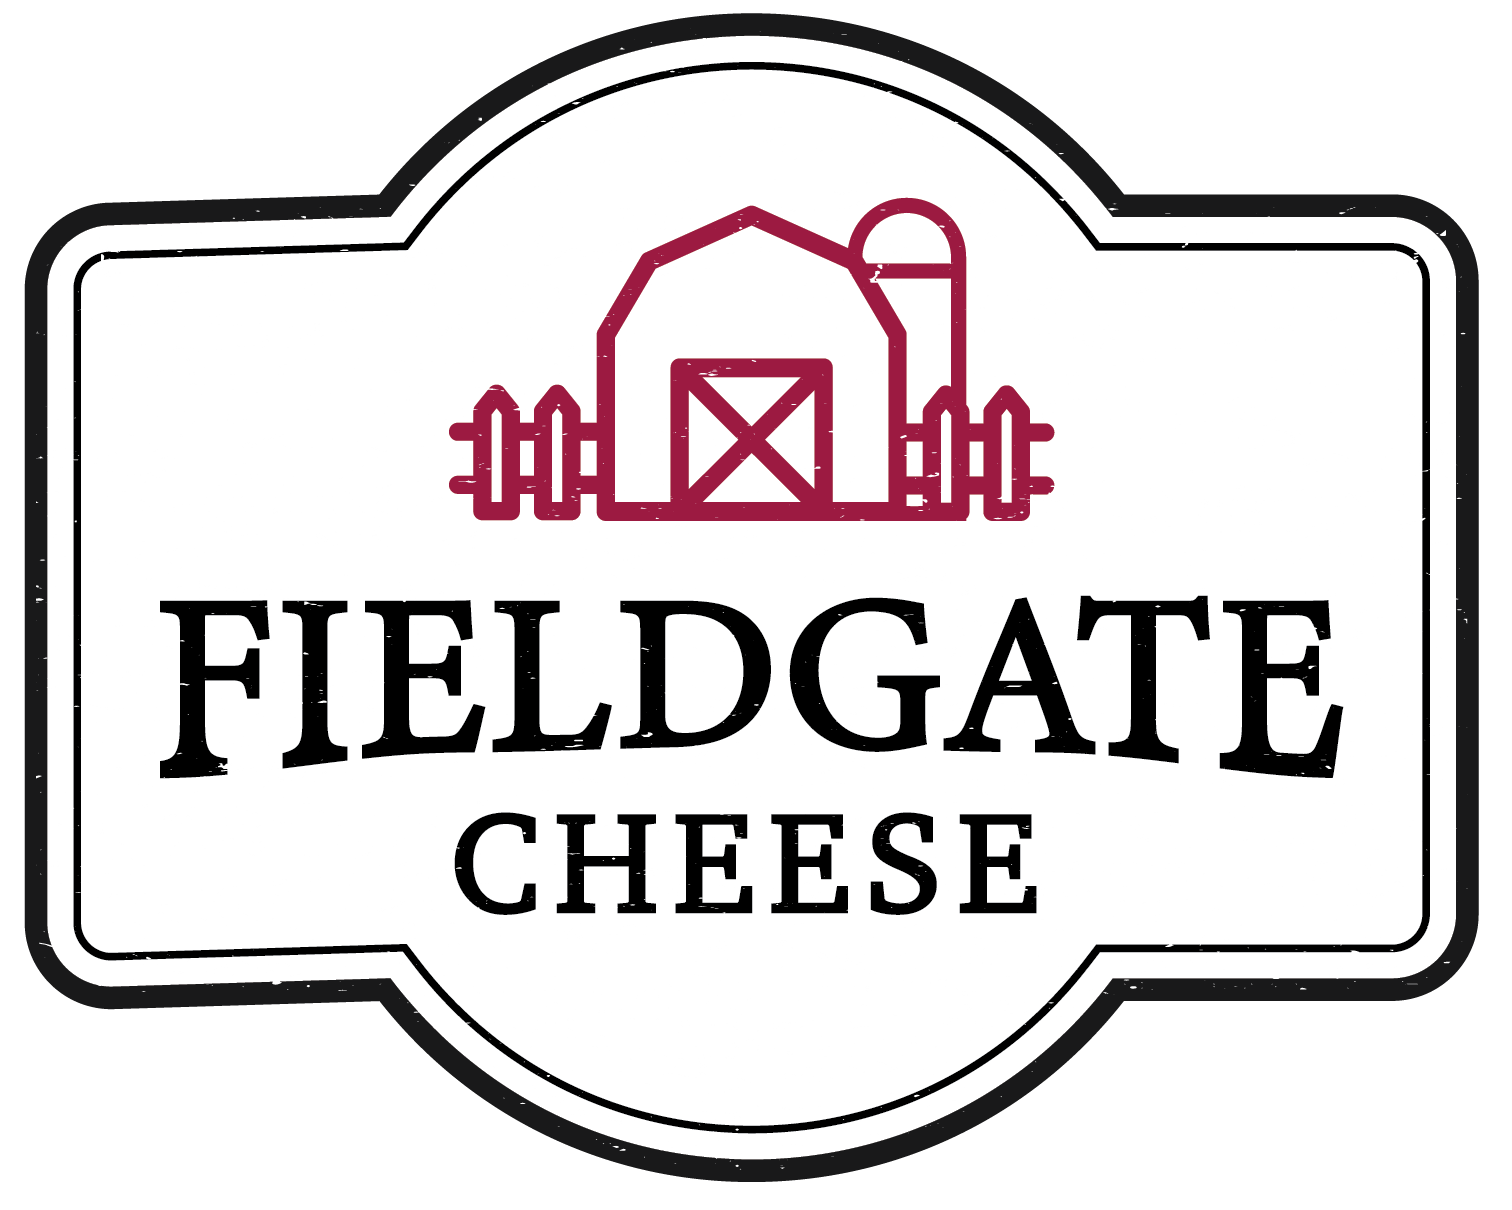 Fieldgate Cheese logo